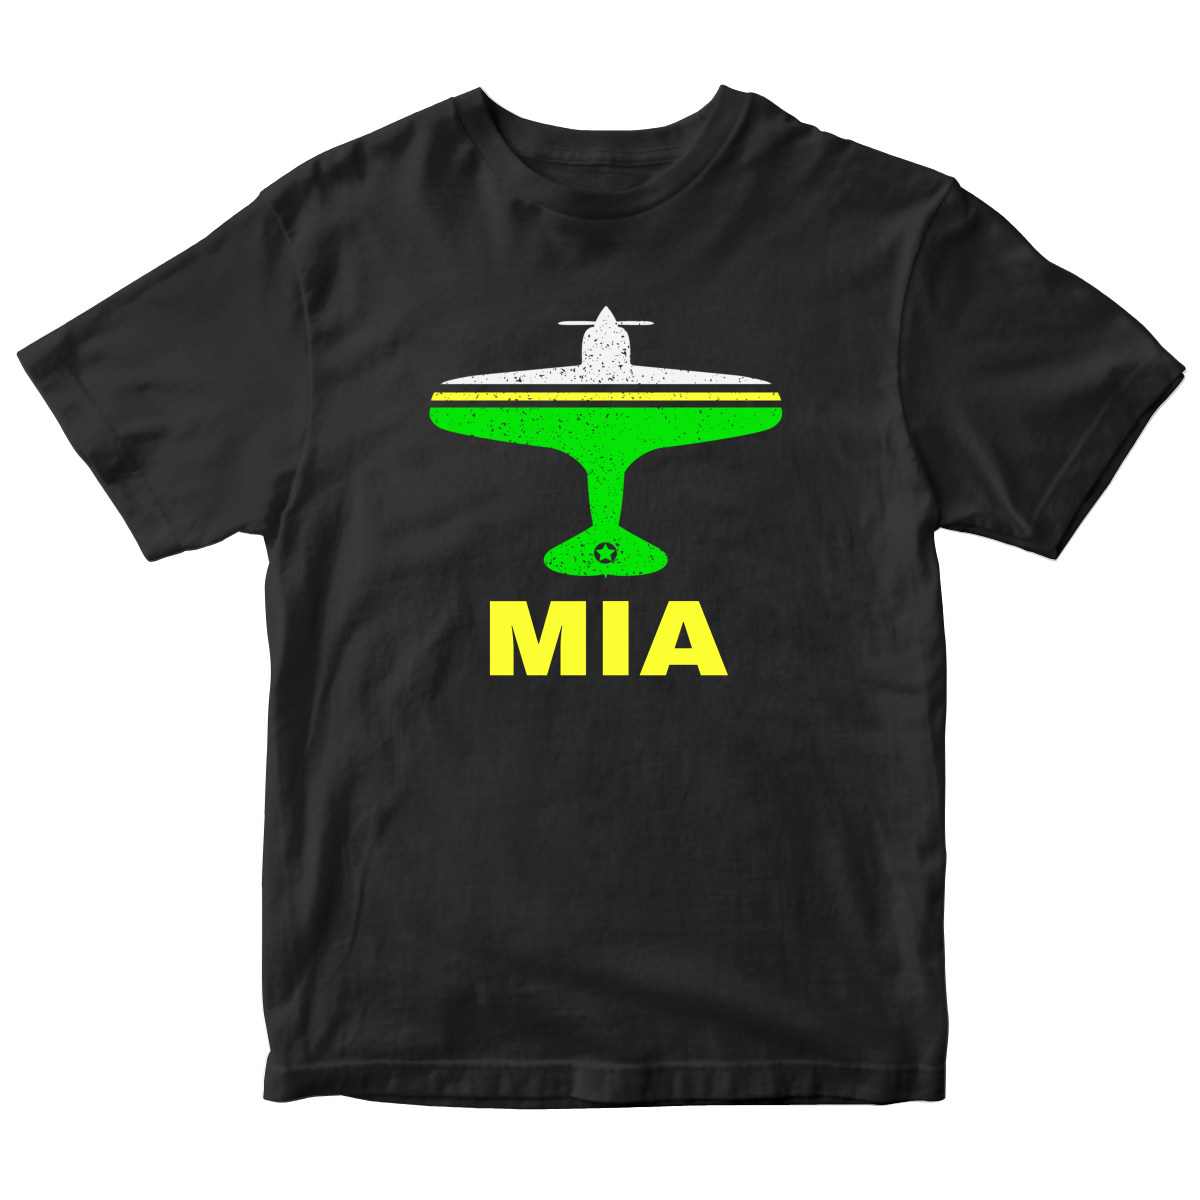 Fly Miami MIA Airport Kids T-shirt | Black